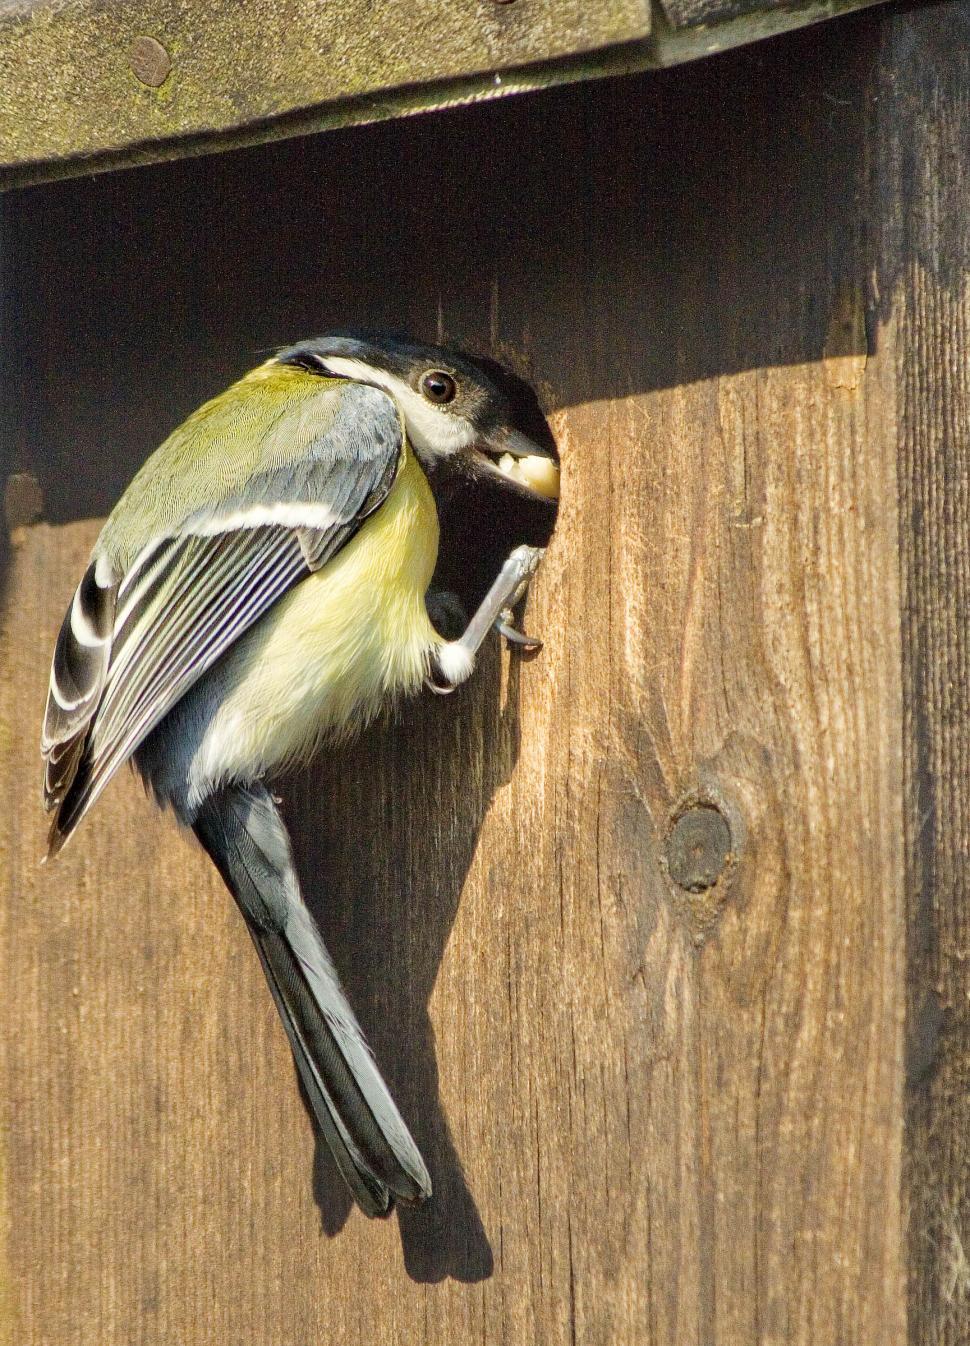 Free Image of Bird in birdhouse 